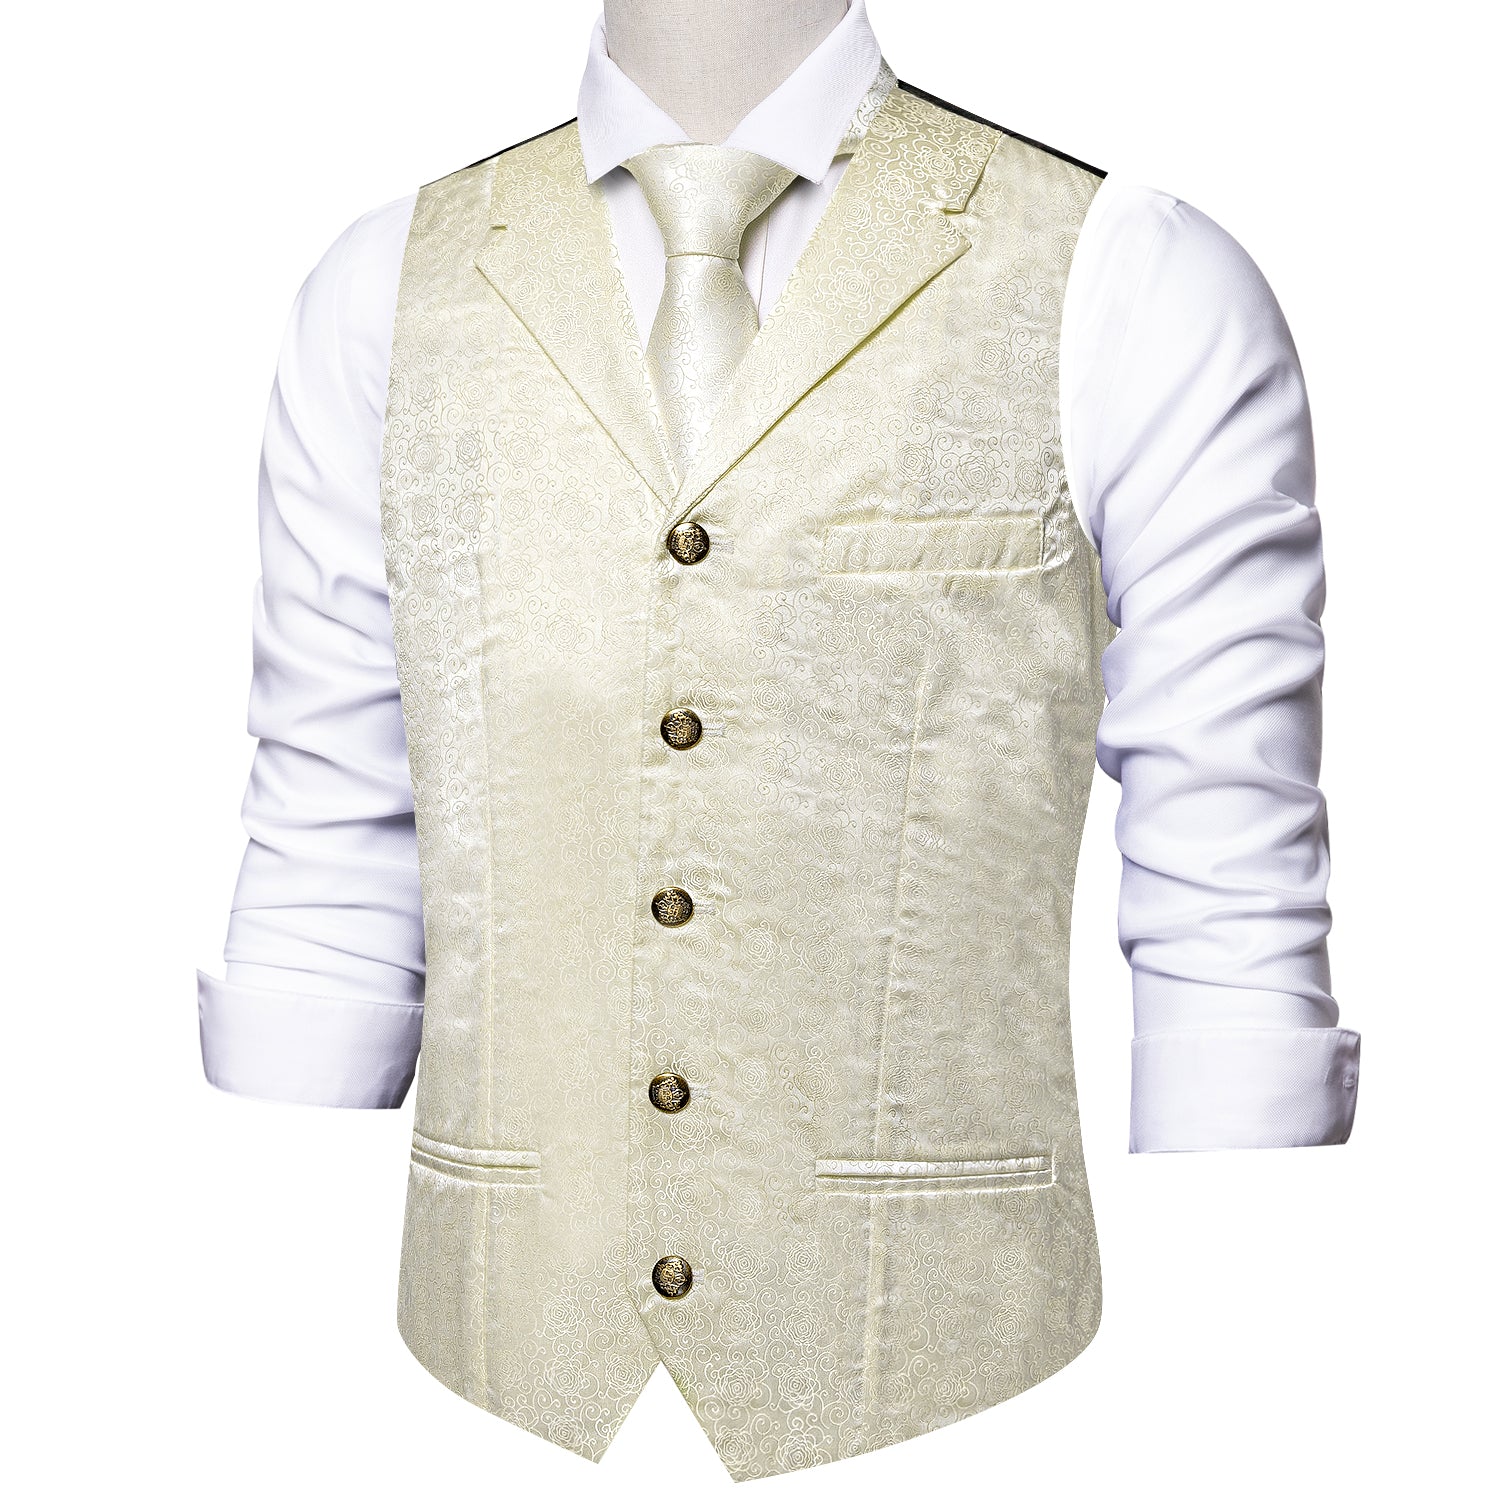 Creamy-White Solid Silk V Neck Vest Tie Pocket Square Cufflinks Set